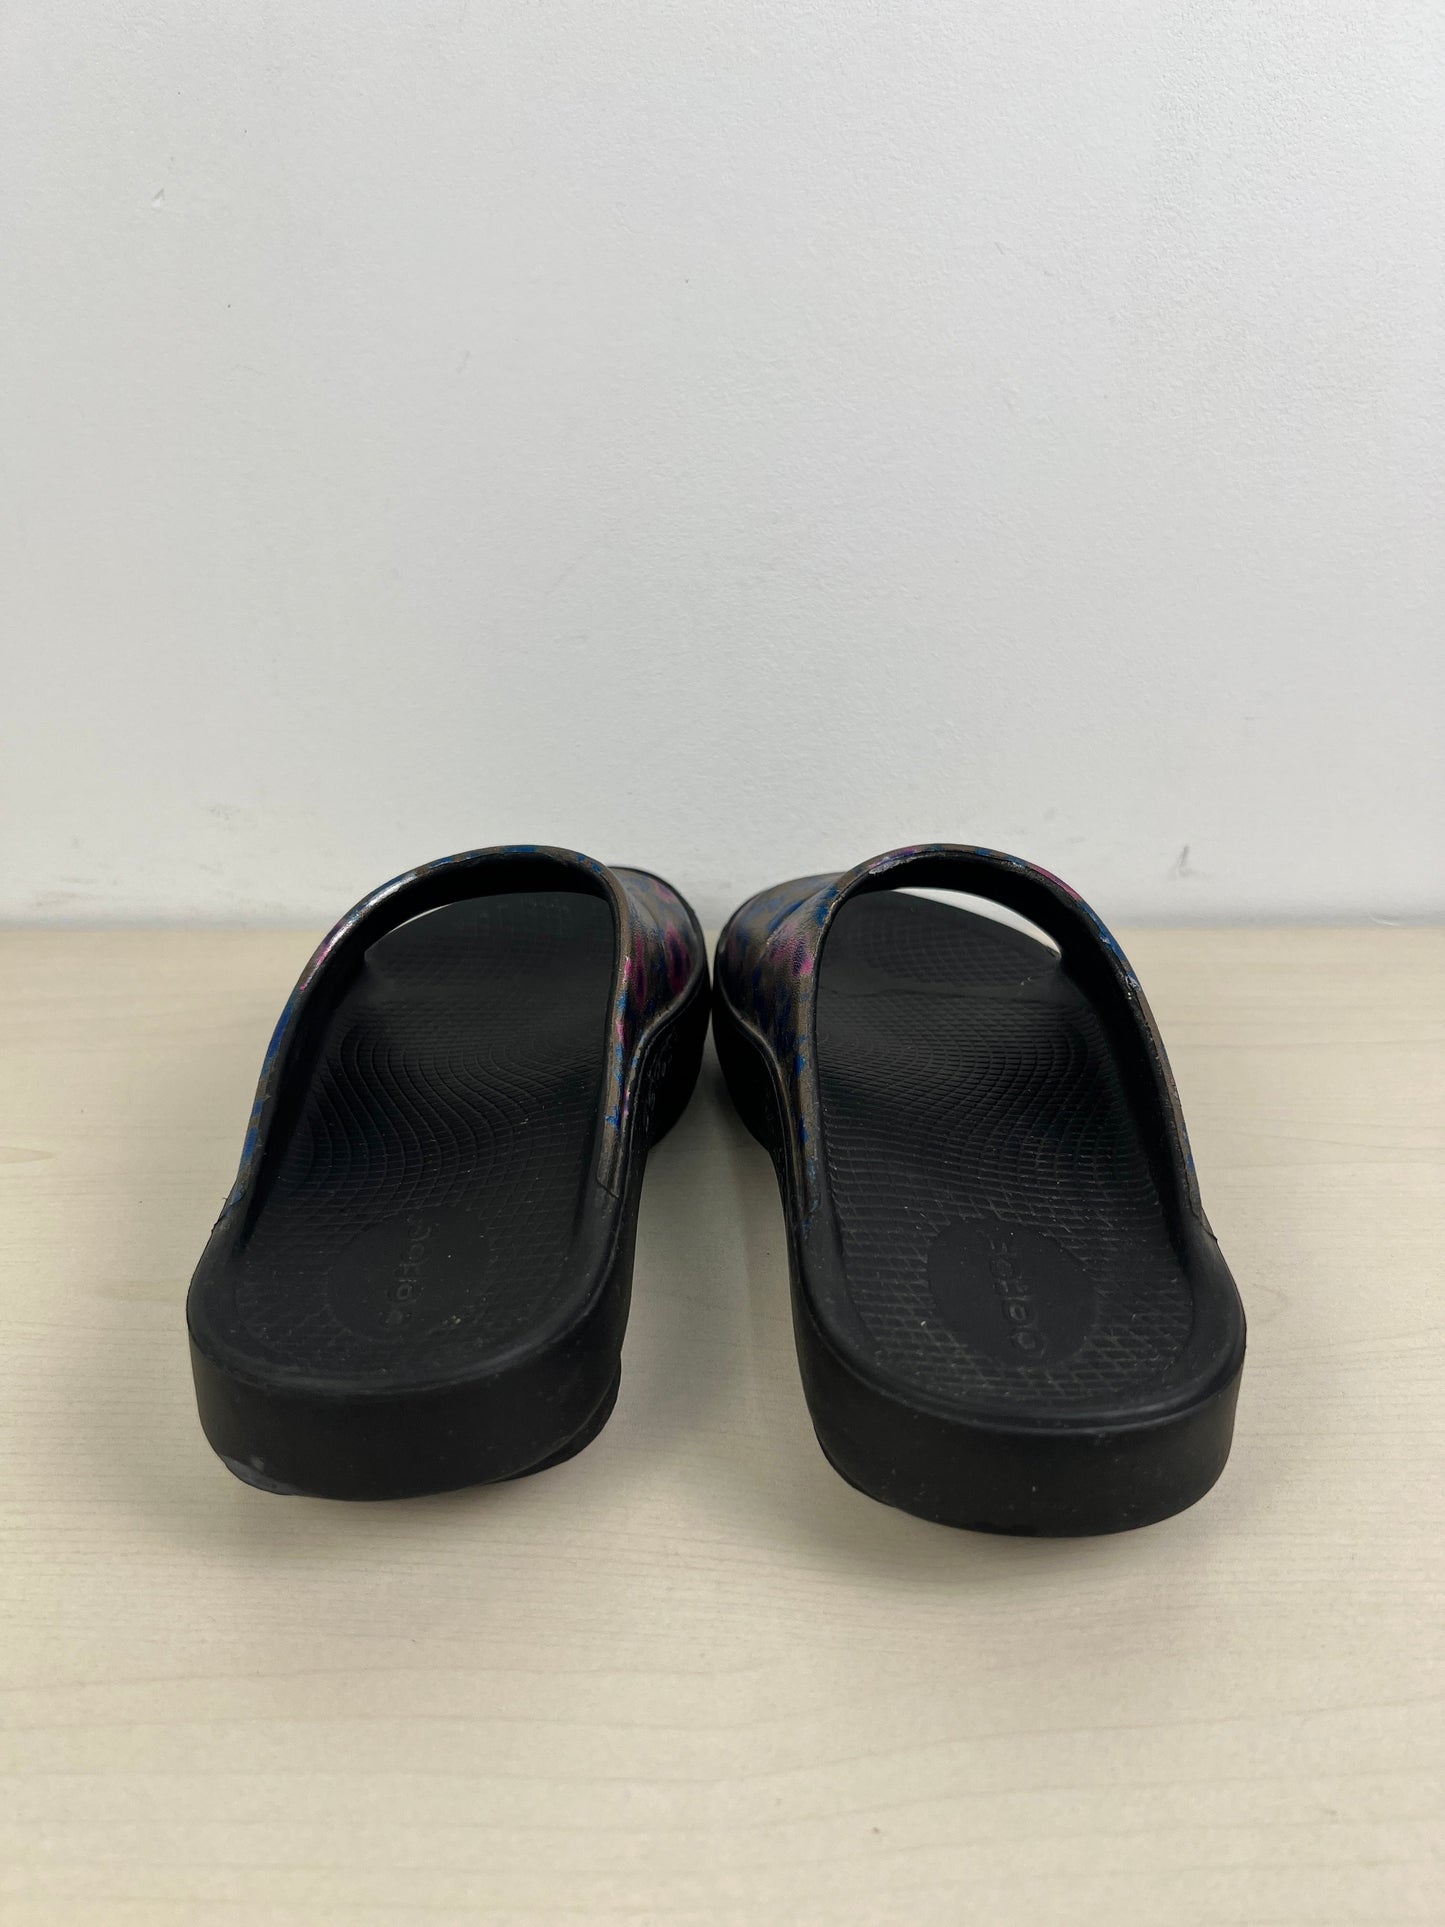 Black Sandals Sport Oofos, Size 7